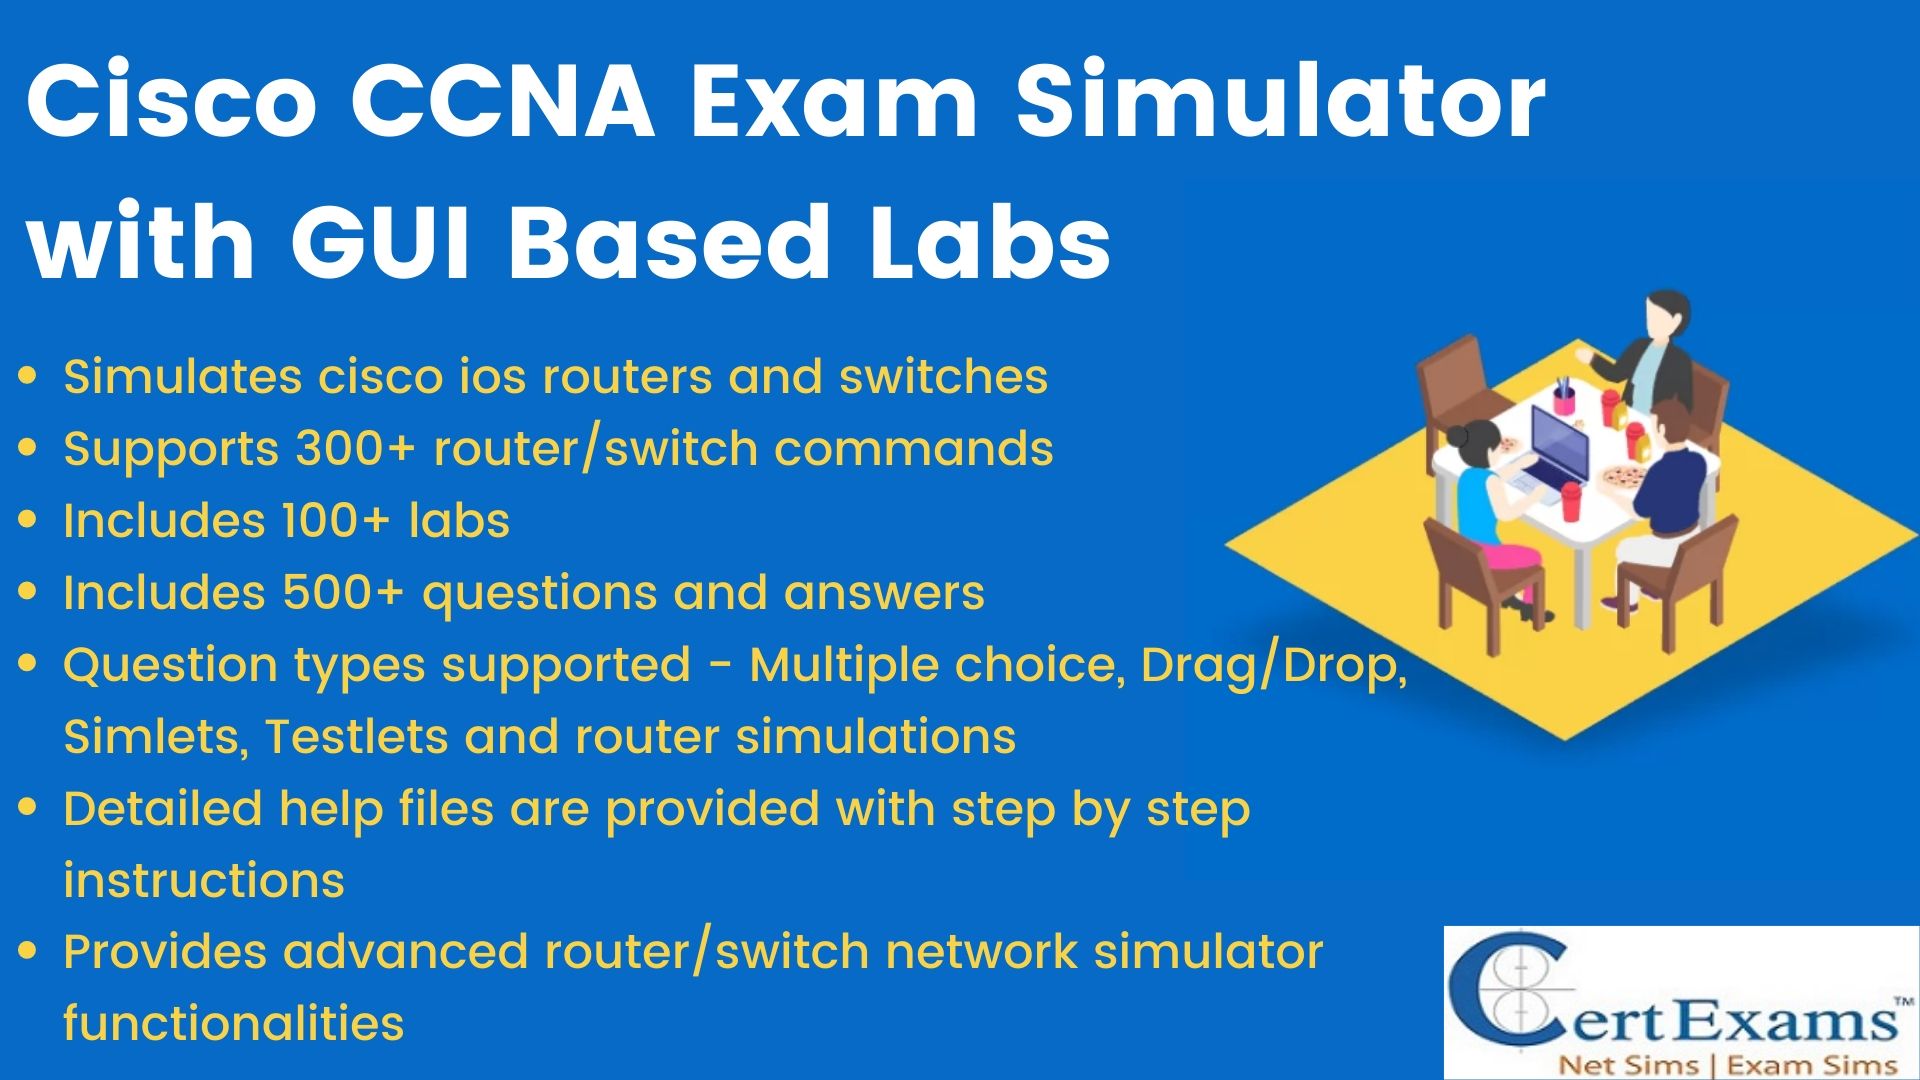 ccna simulation exam practice